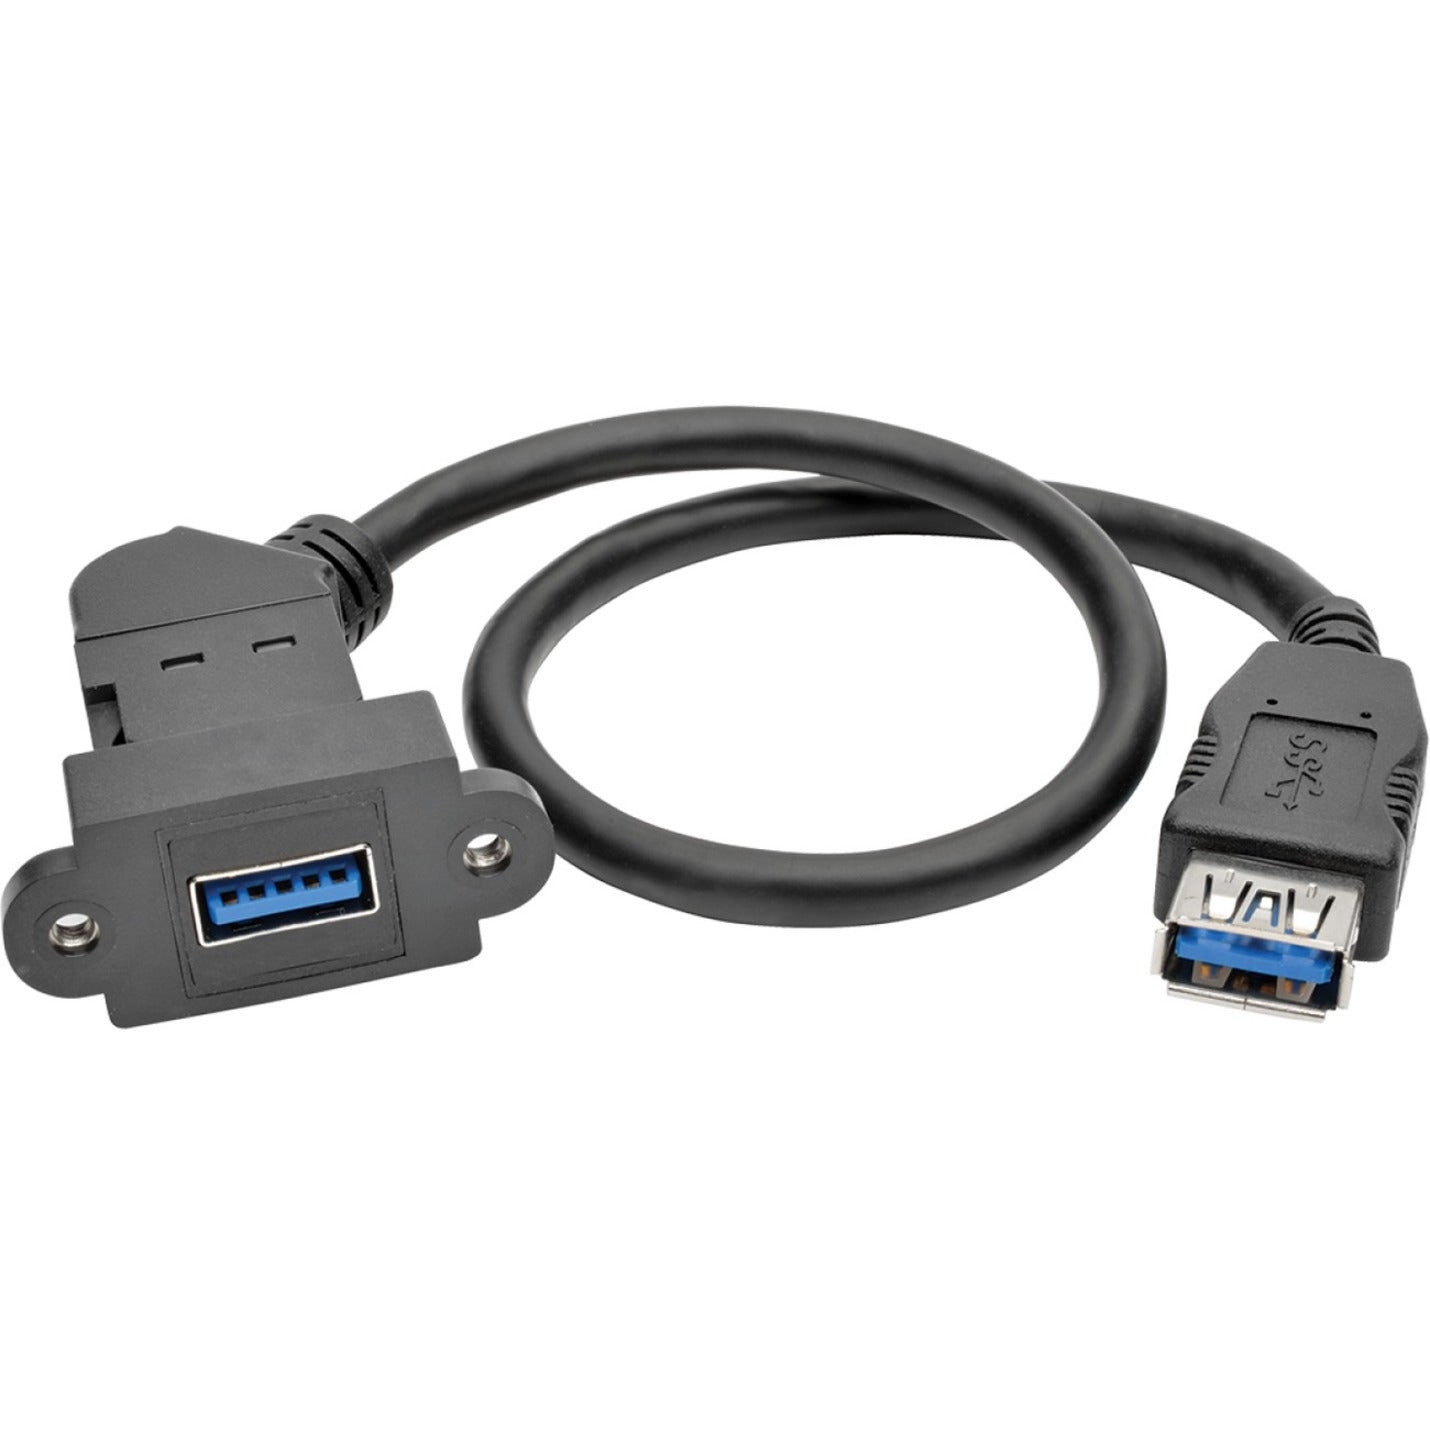 Tripp Lite U325-001-KPA-BK USB Data Transfer Cable, Angled Connector, Black